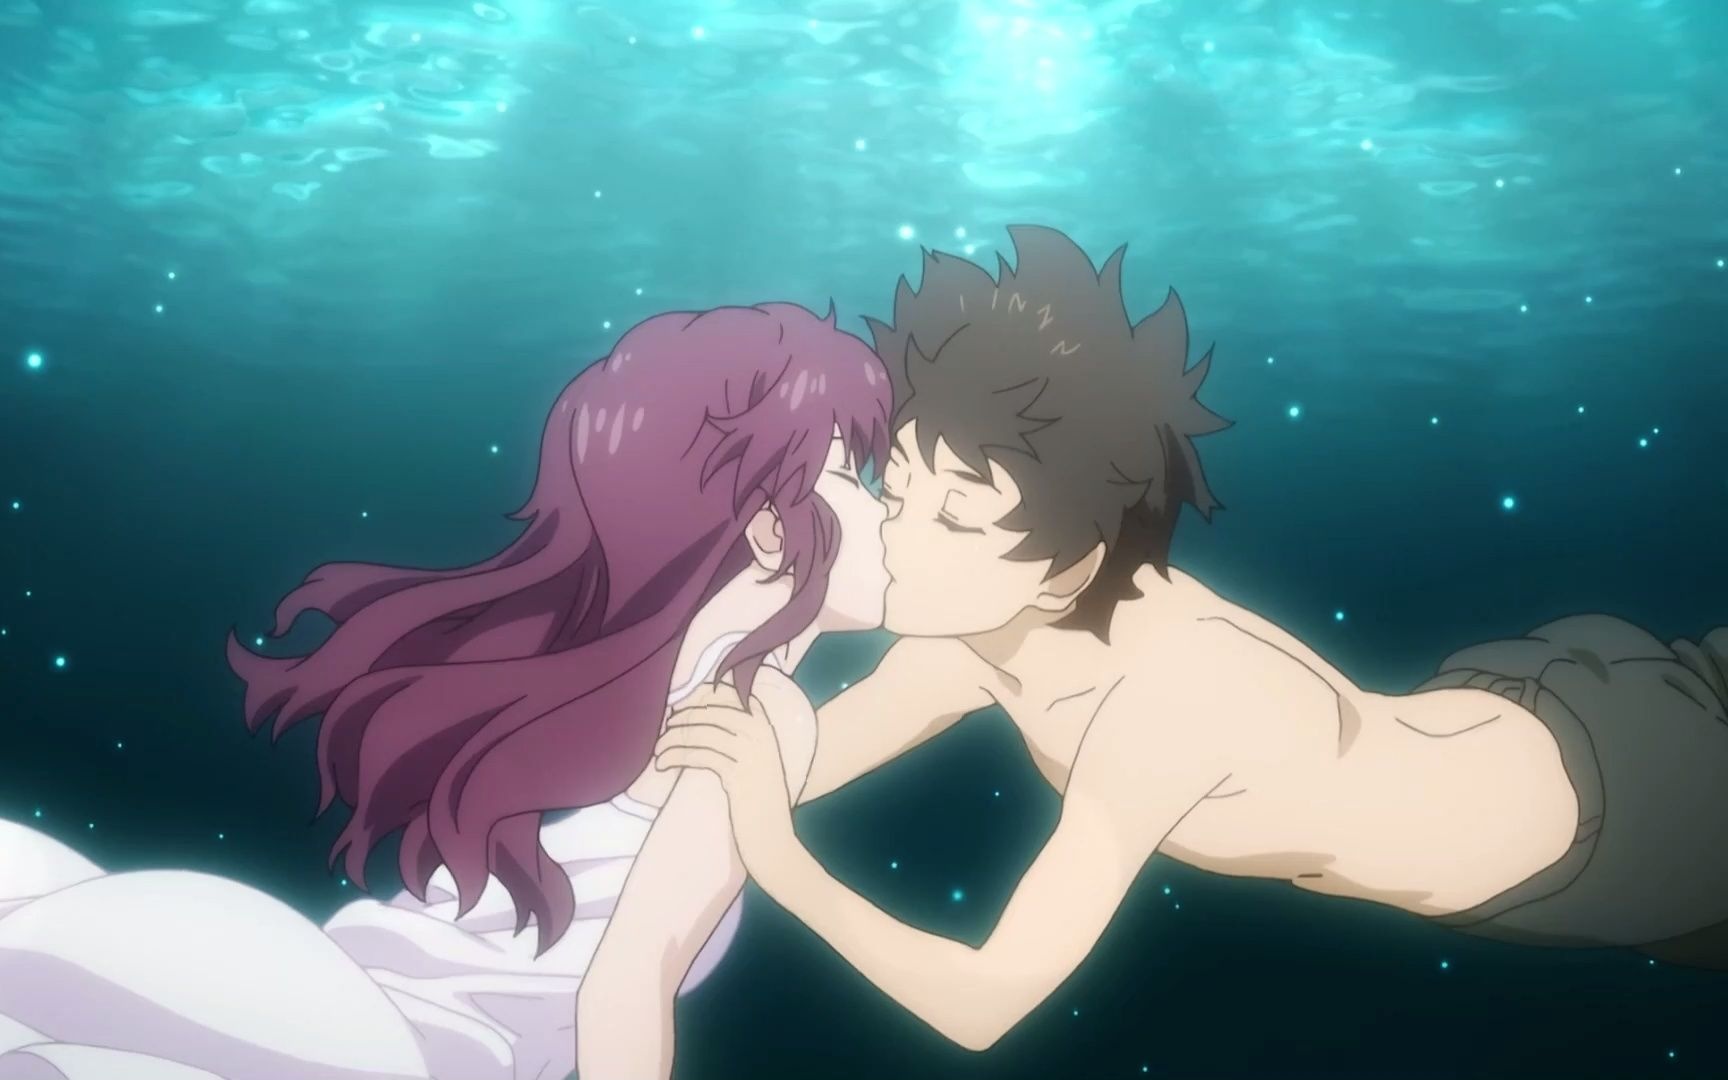 Anime] Kisses in Animations - Bilibili